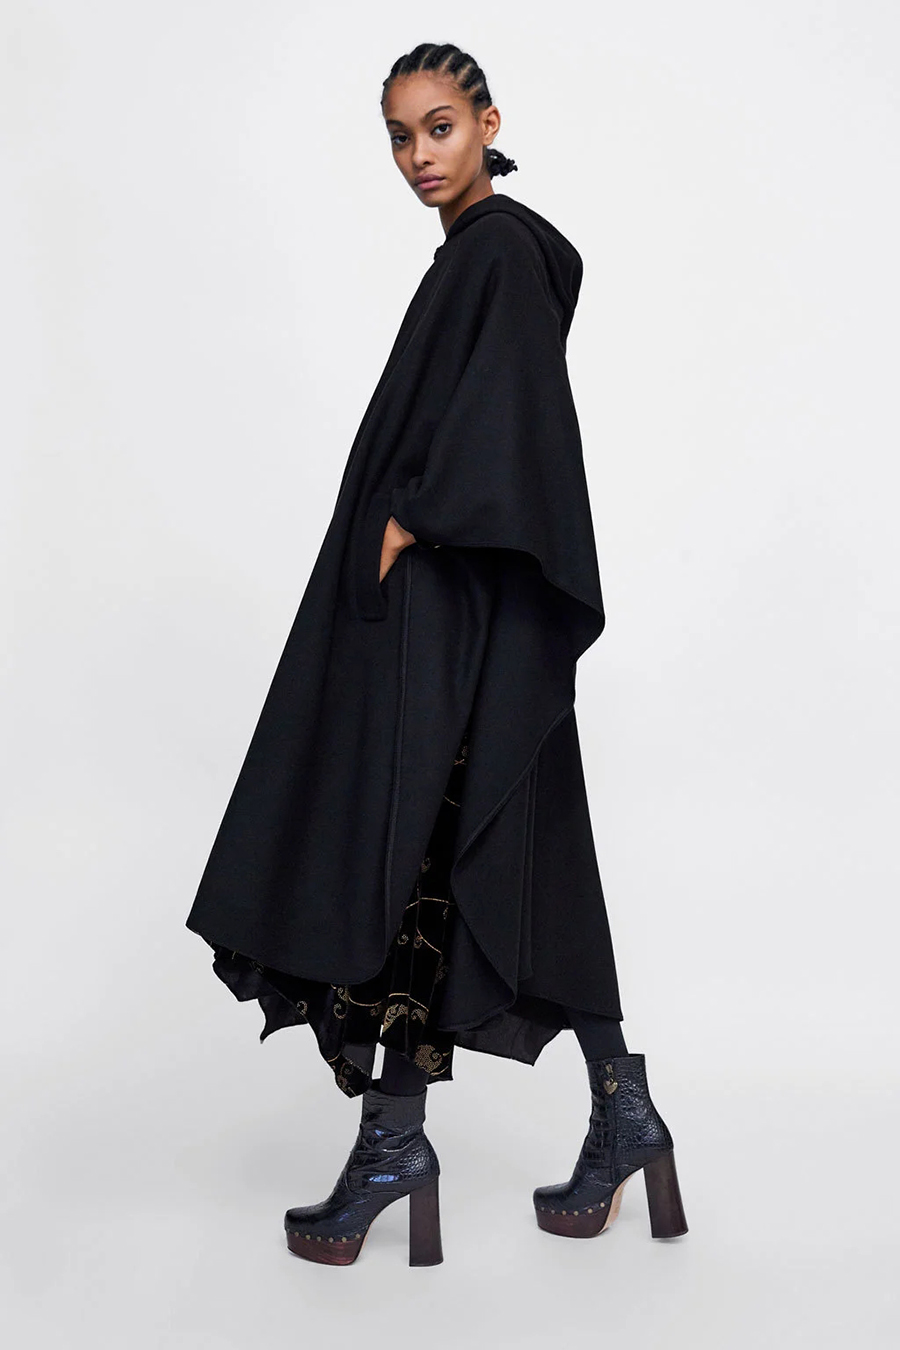 Fashion Black Hooded Long Cloak Woolen Coat,Coat-Jacket